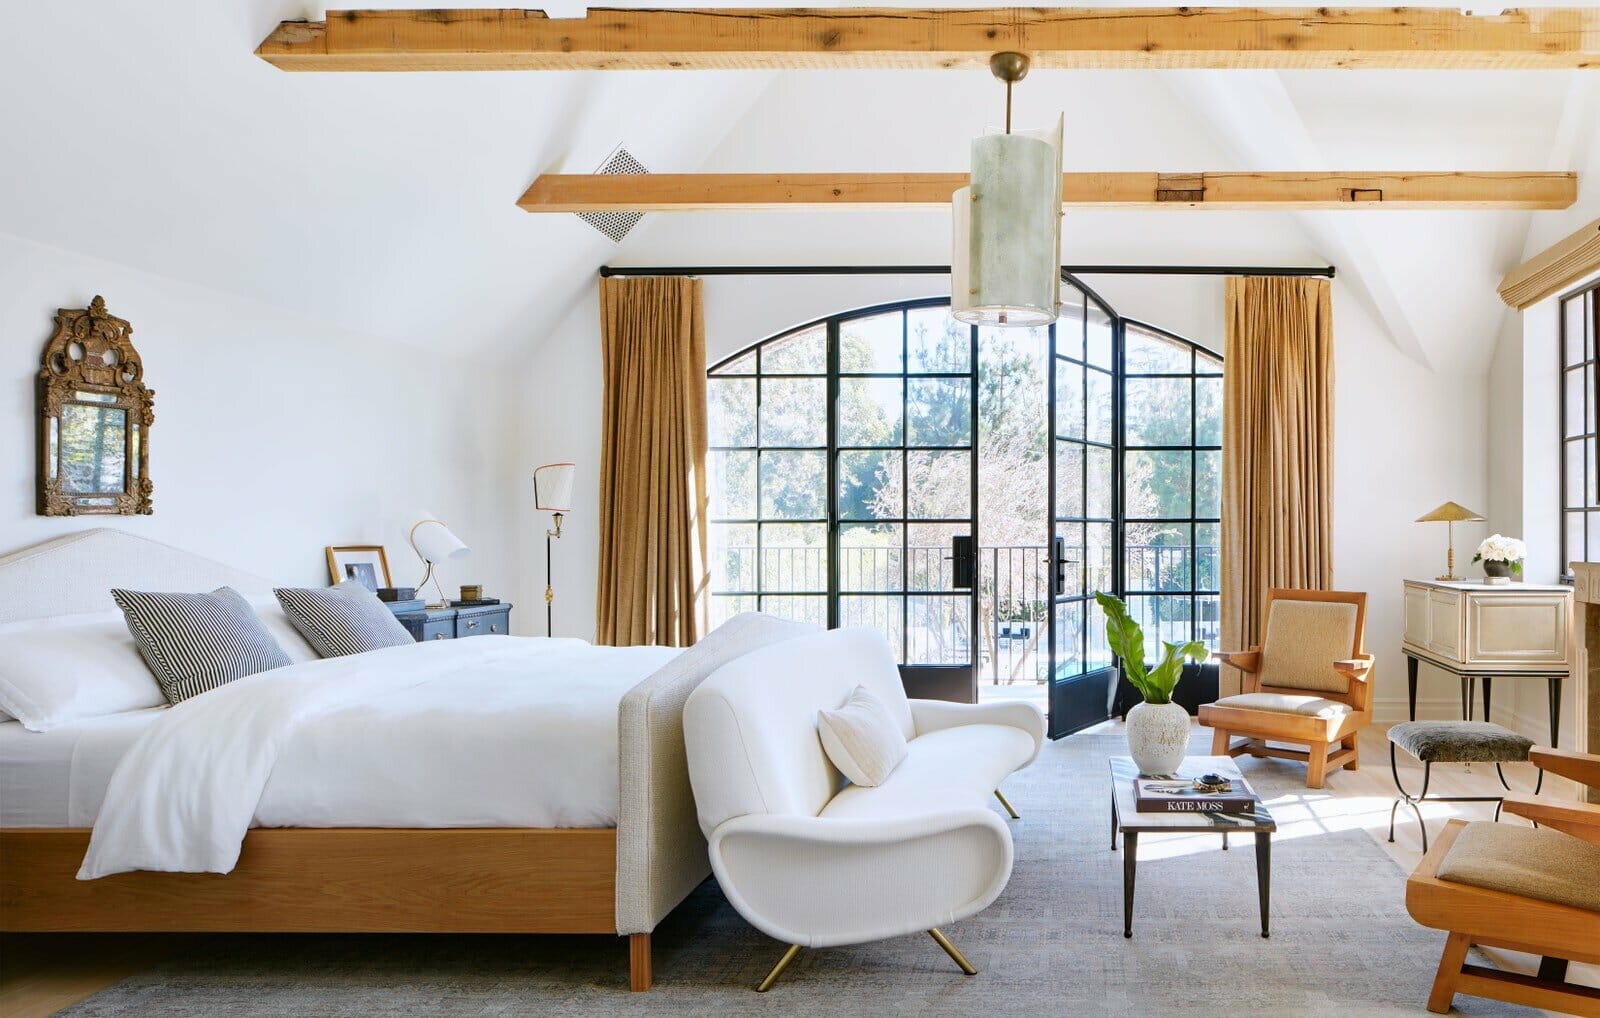 Modern Rustic Master Bedroom Ideas Create A Personal Retreat By Nate Berkus 